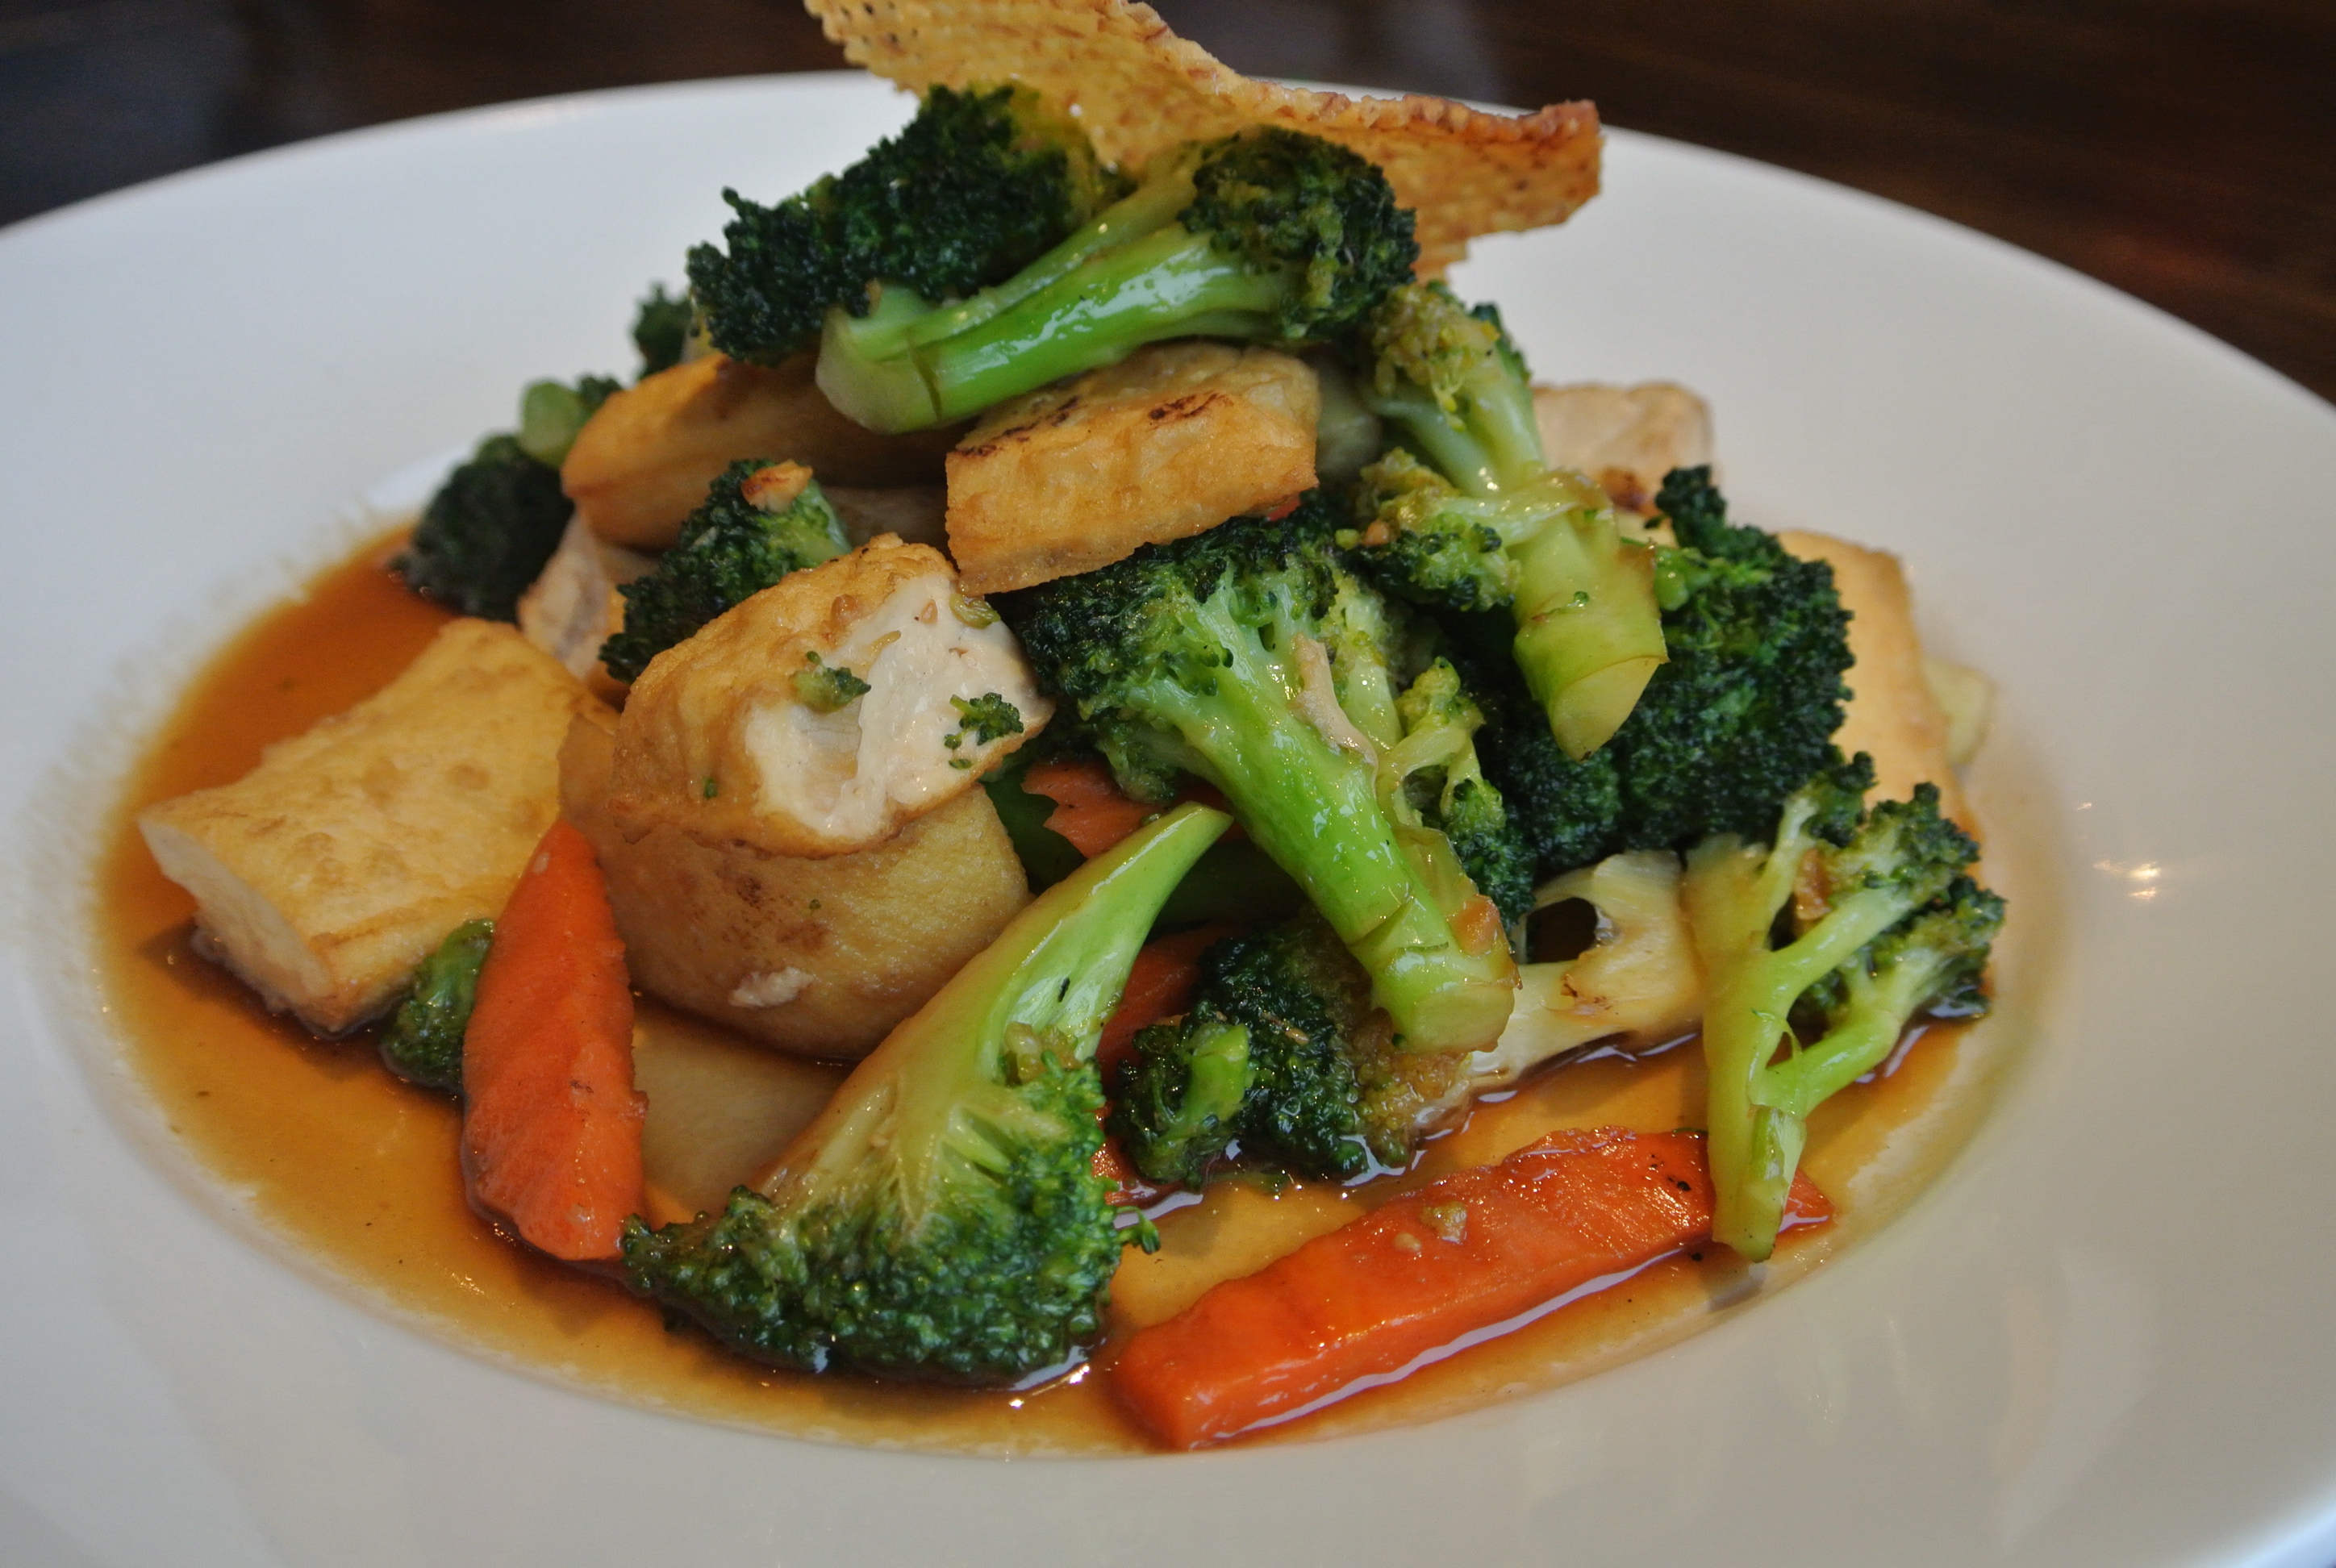 Broccoli and Tofu